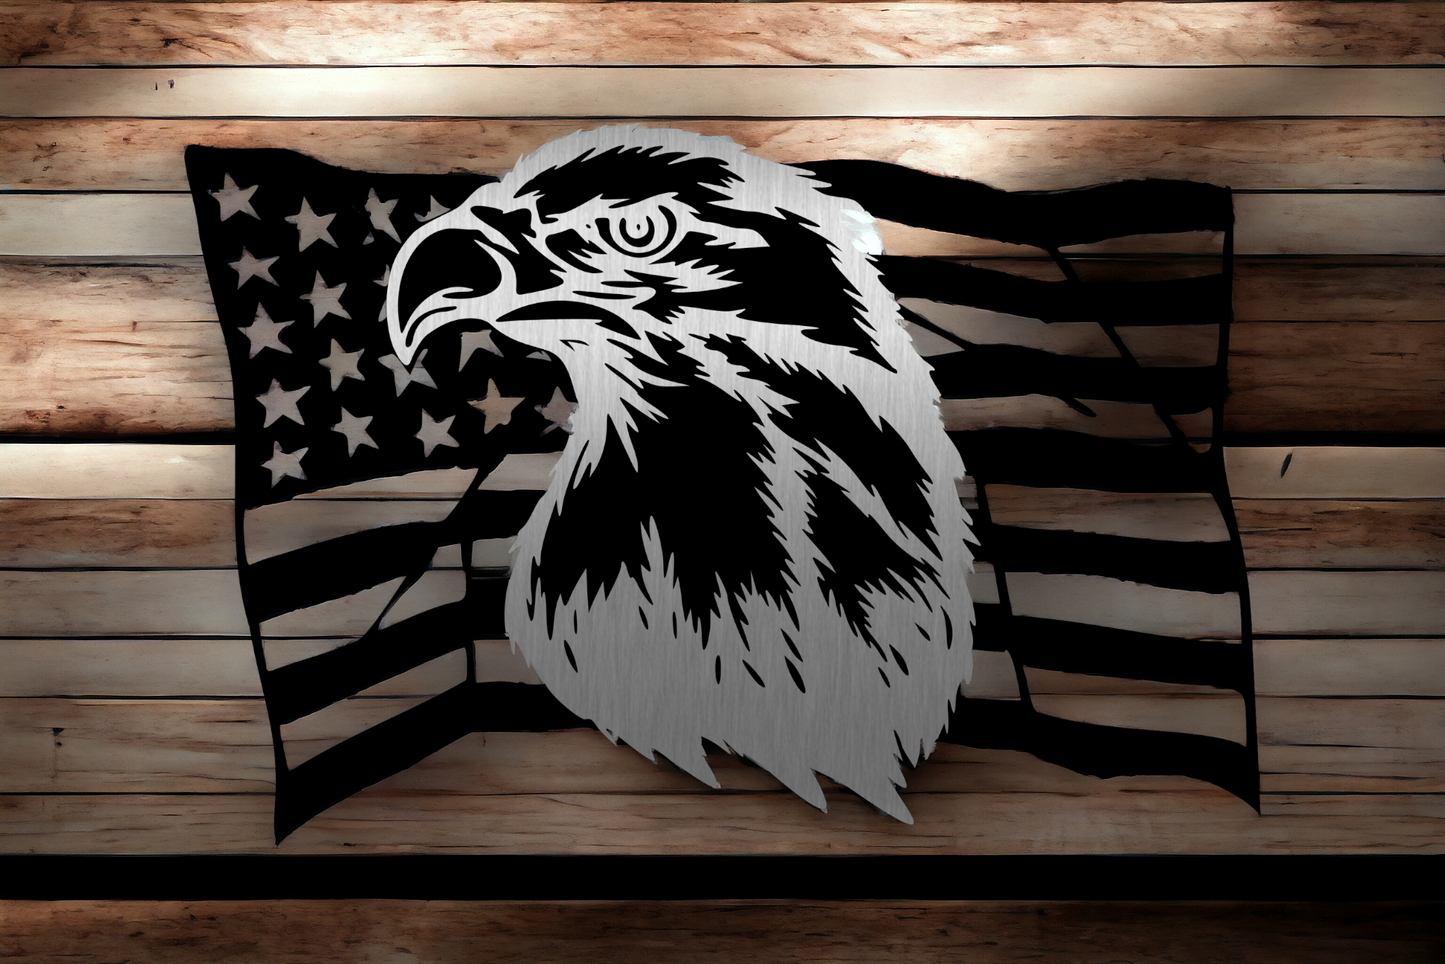 Waving American flag with eagle head